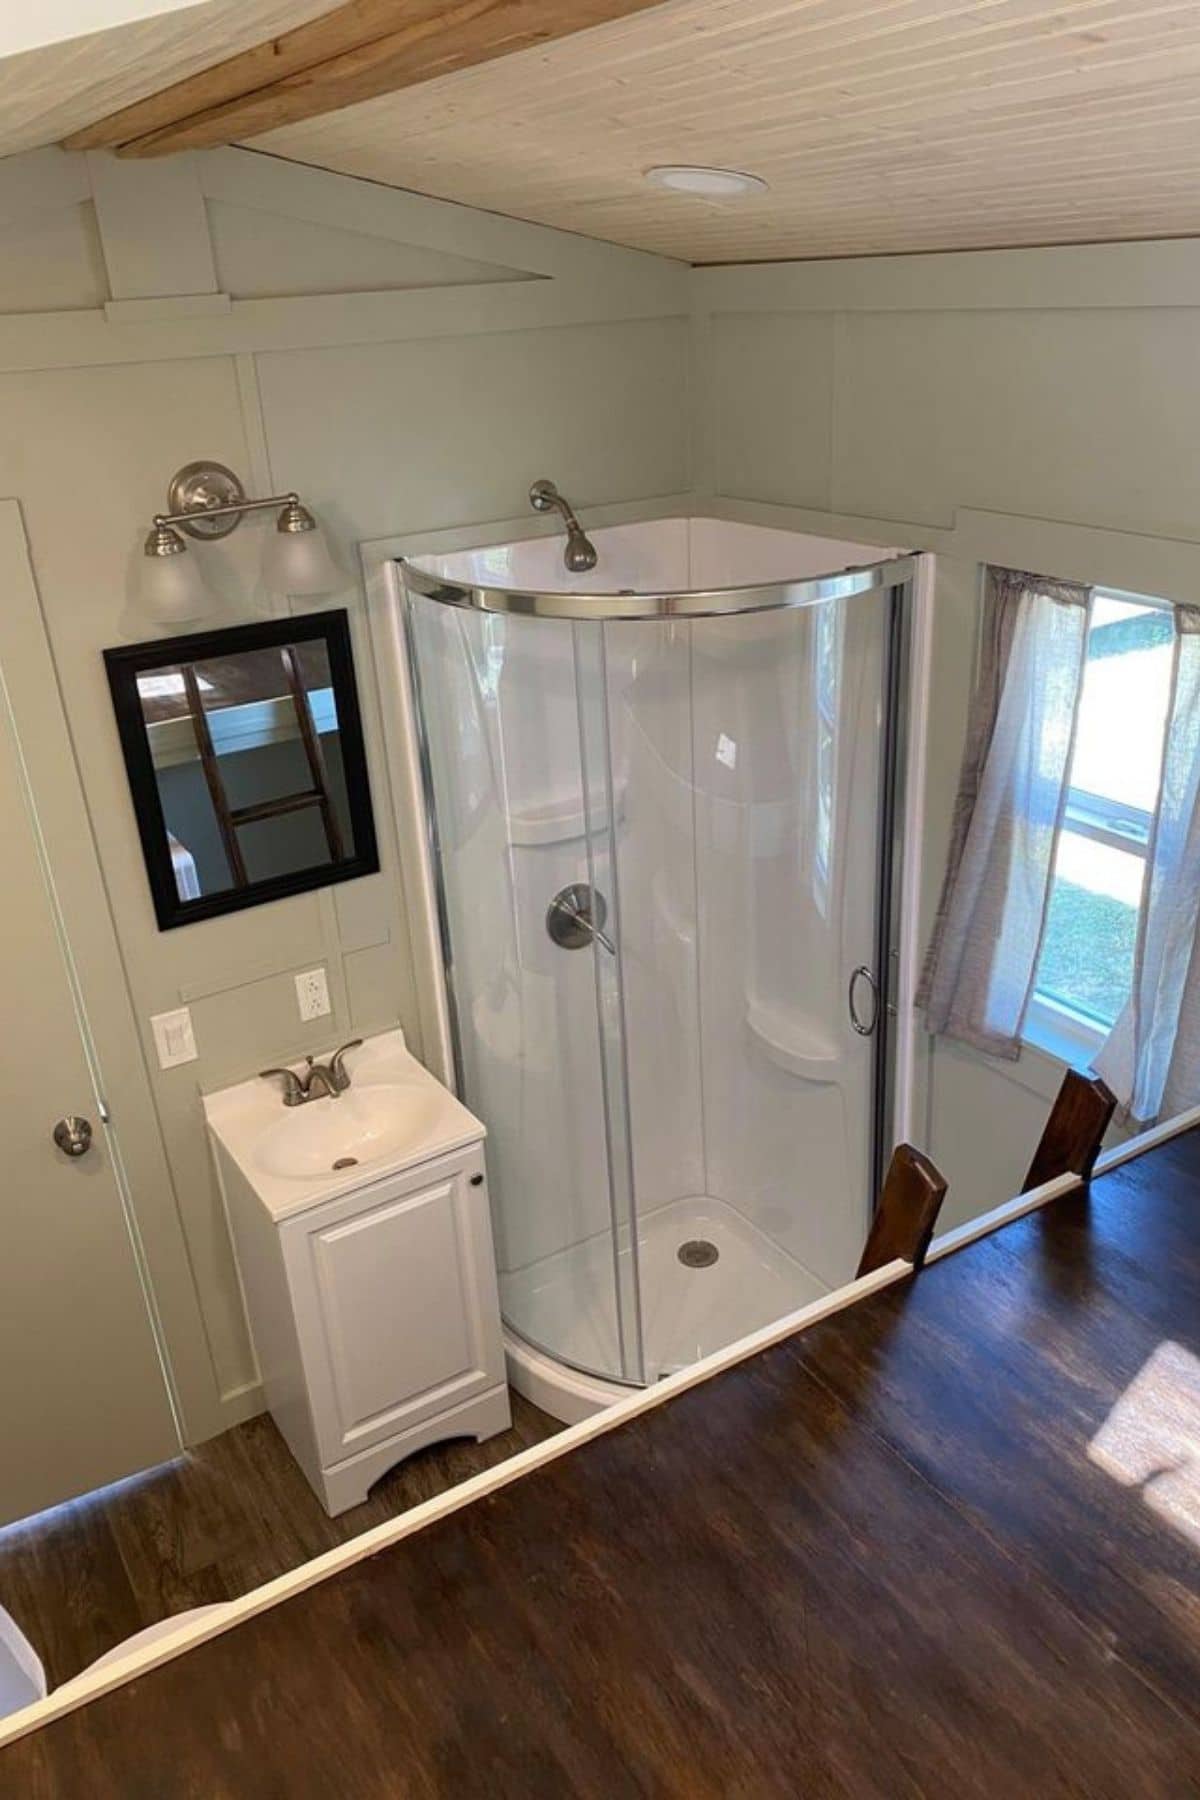 Glass shower in corner next to white vanity with black mirror above